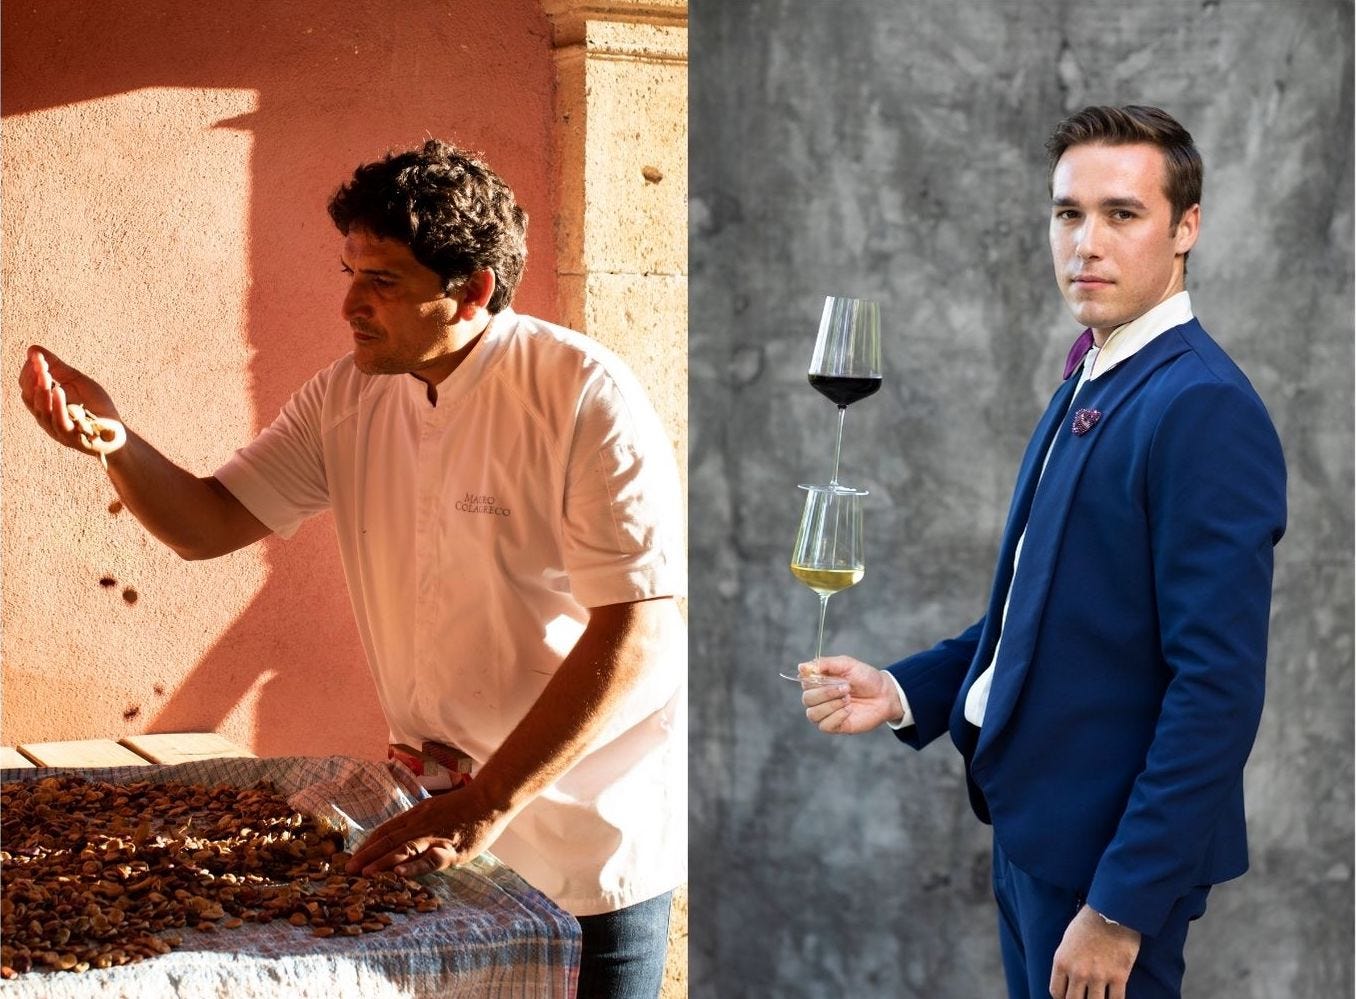 Mirazur Chef Mauro Colagreco (left) and Head Sommelier Benoît Huguenin (right). Mauro Colagreco/Matteo Carassale/Business Insider